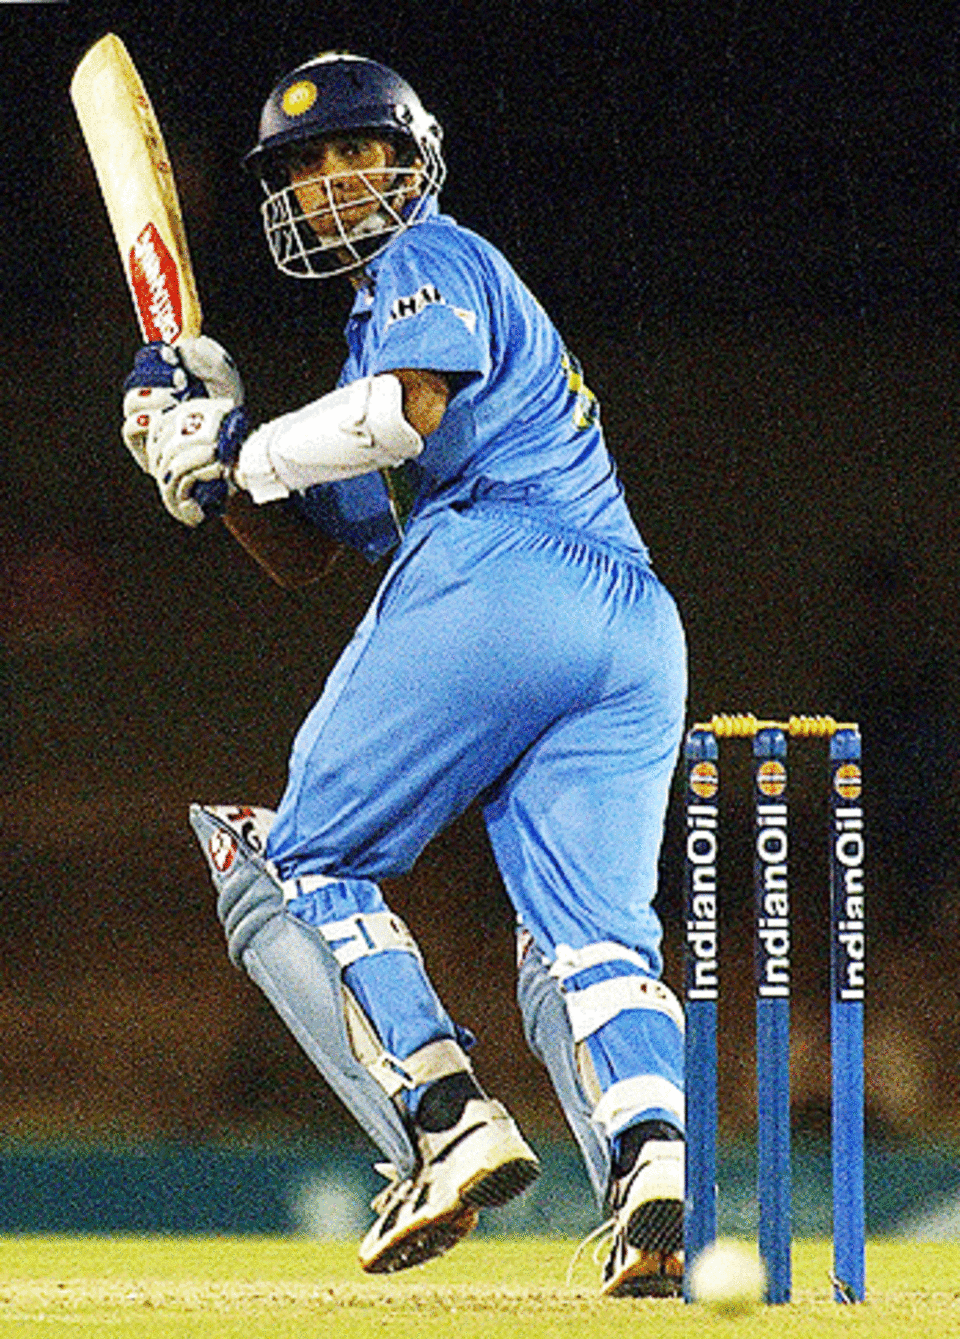 Rahul Dravid plays it fine on his way to a half-century